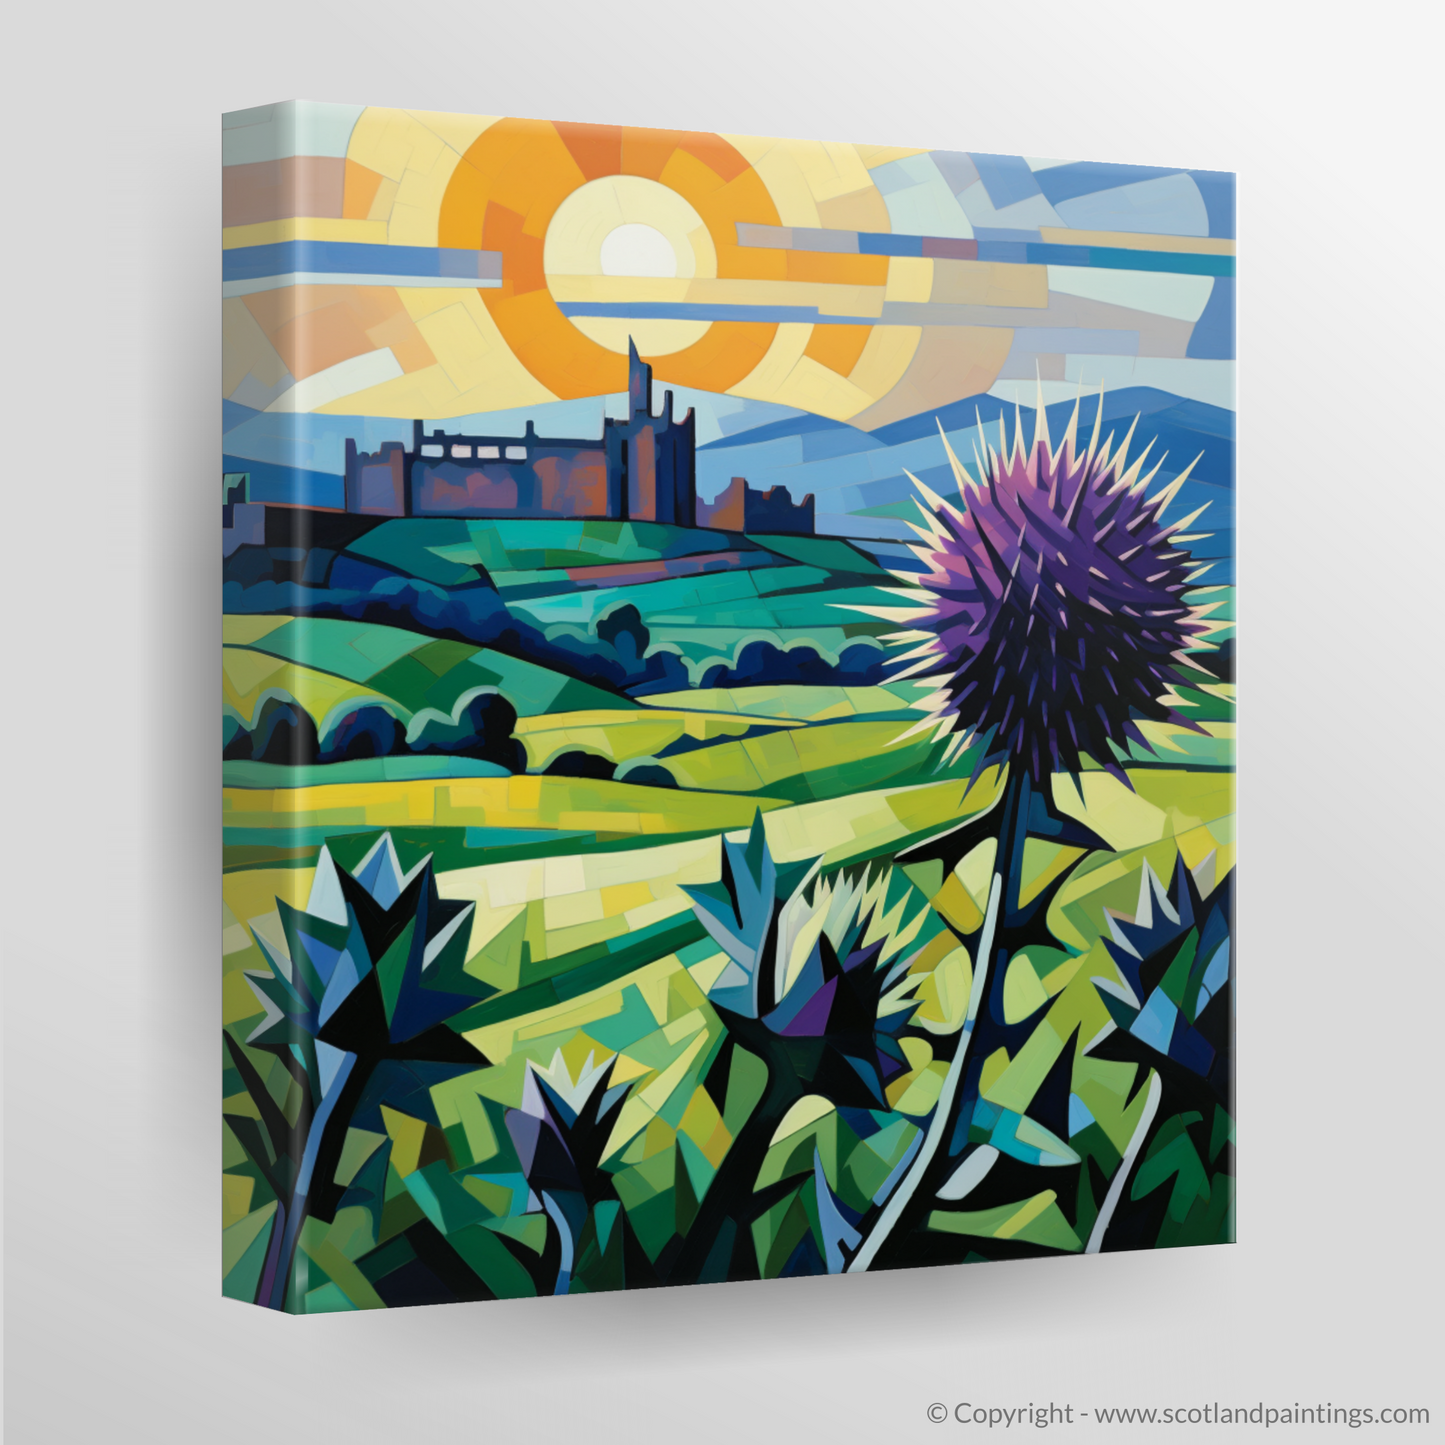 Cubist Thistle and Stirling Castle: A Scottish Landscape Reimagined